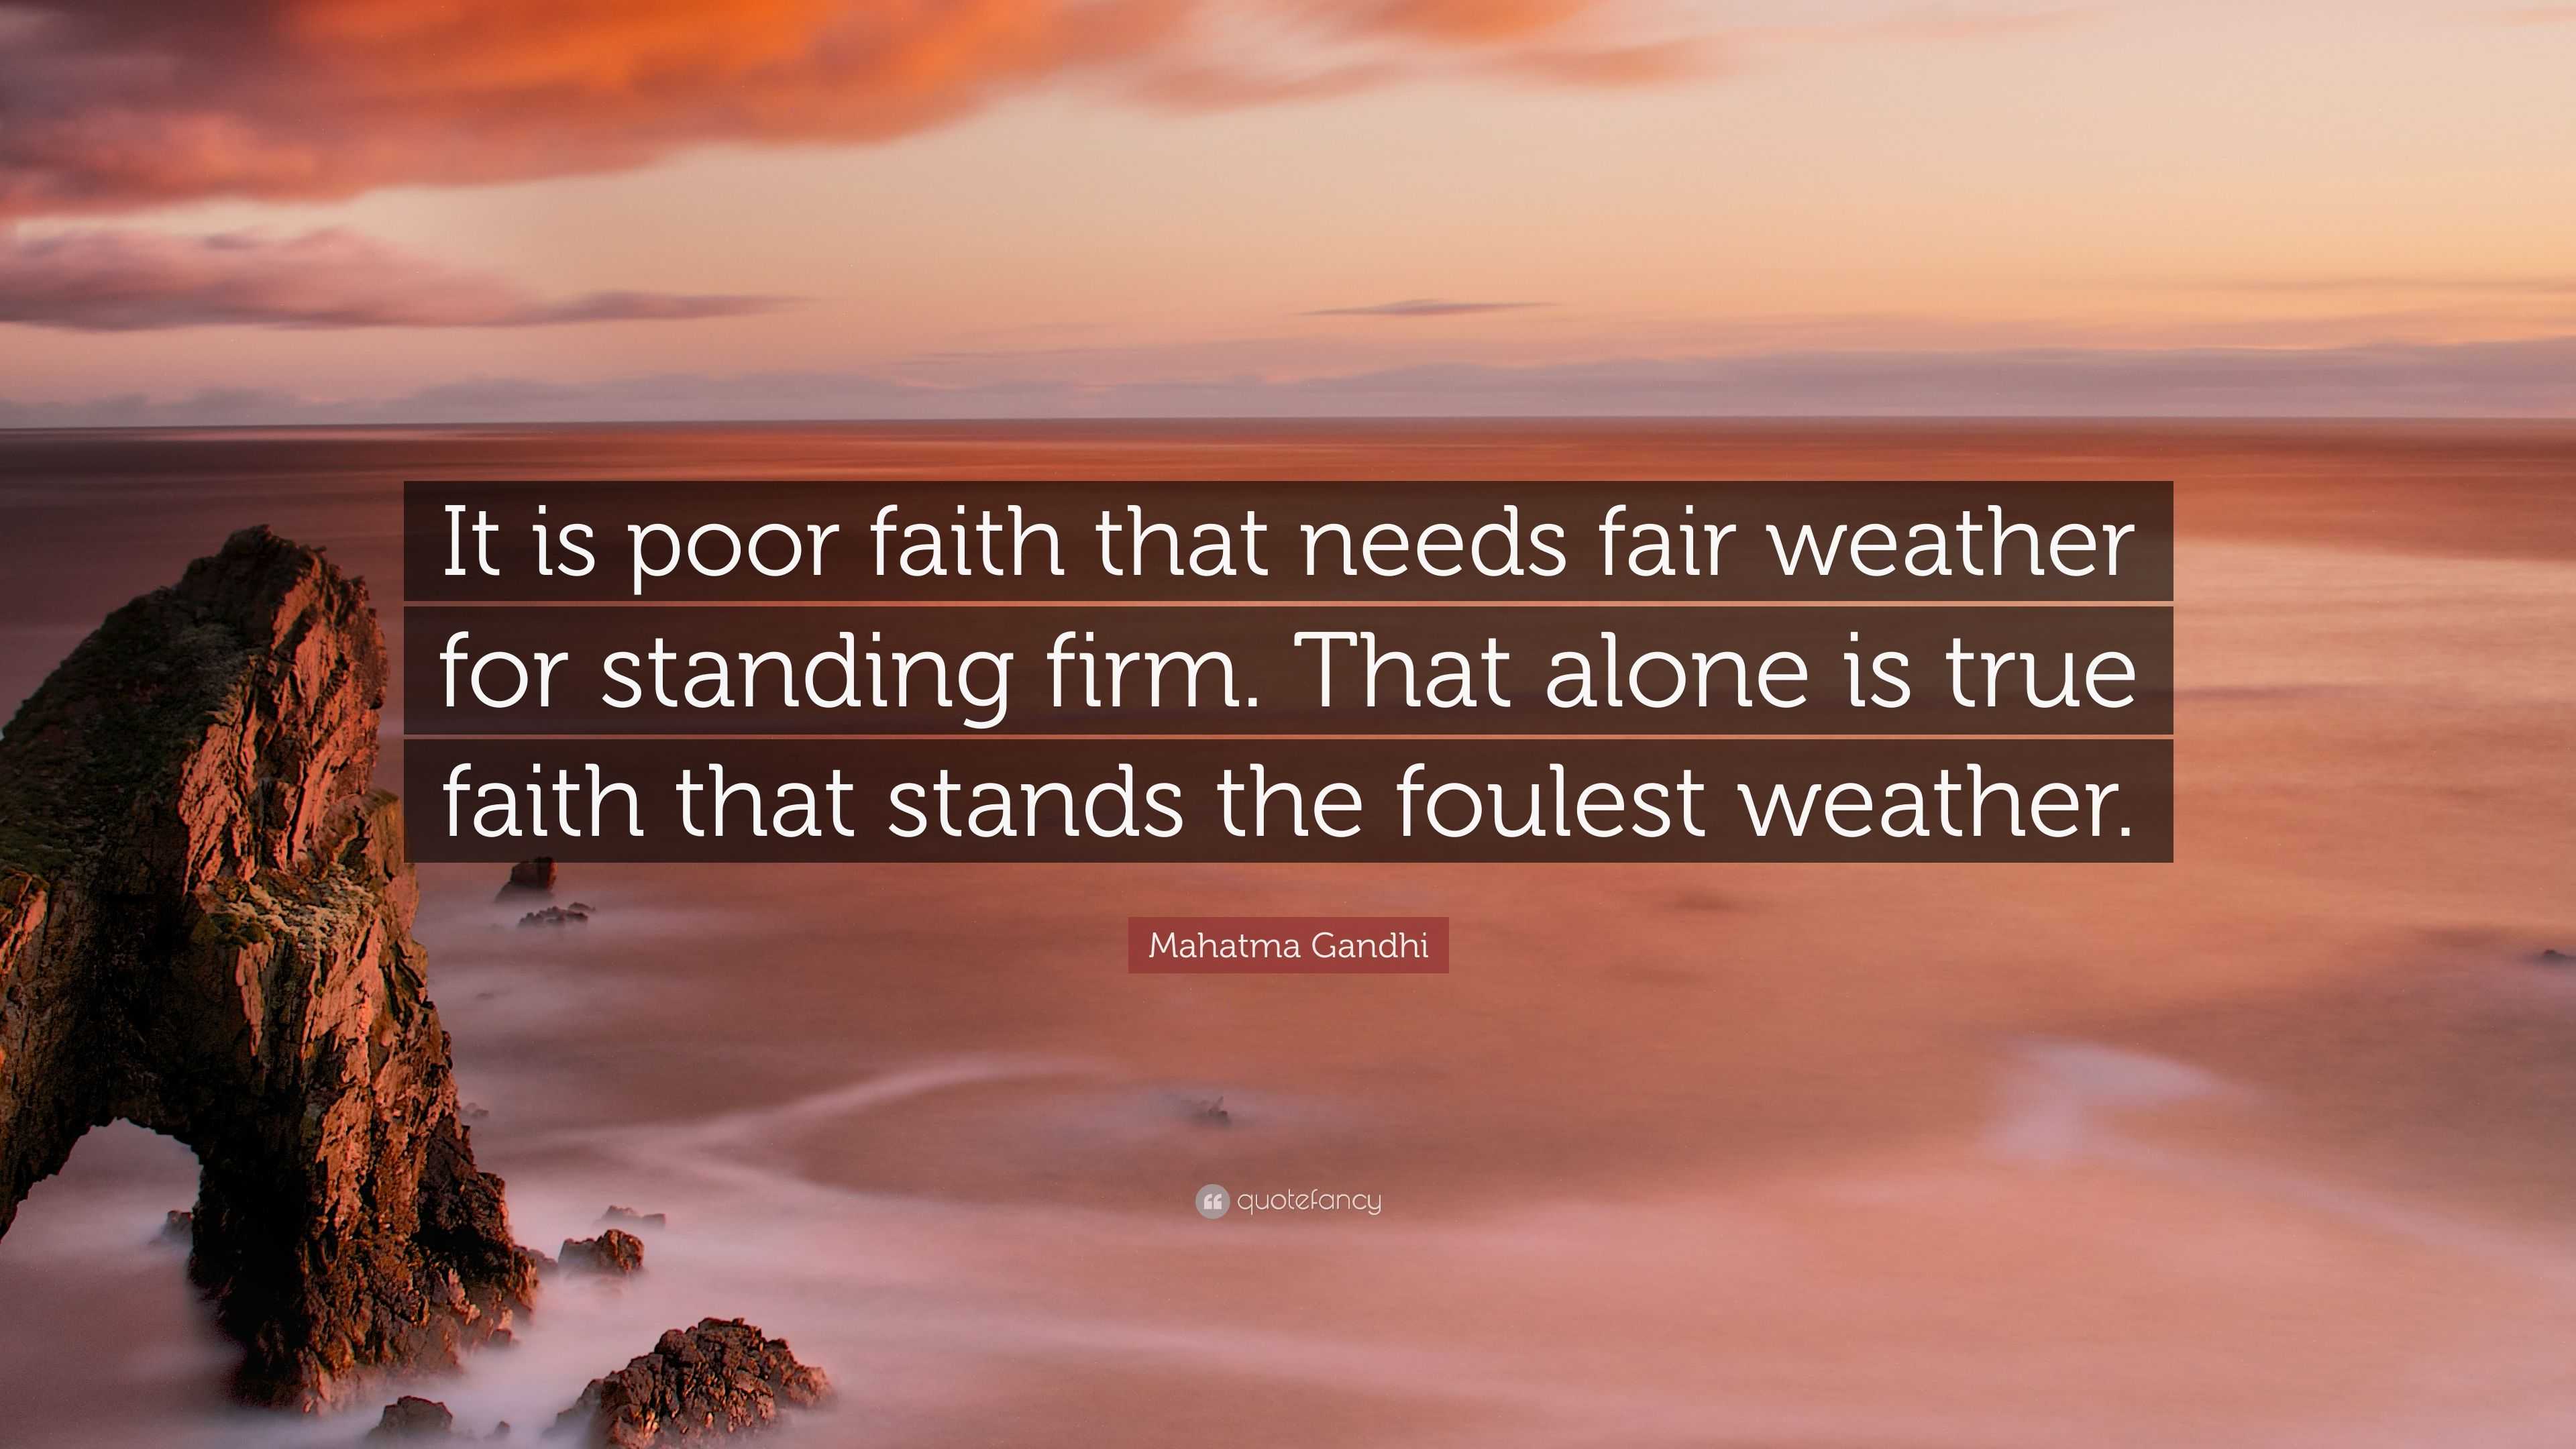 Mahatma Gandhi Quote: “It is poor faith that needs fair weather for ...